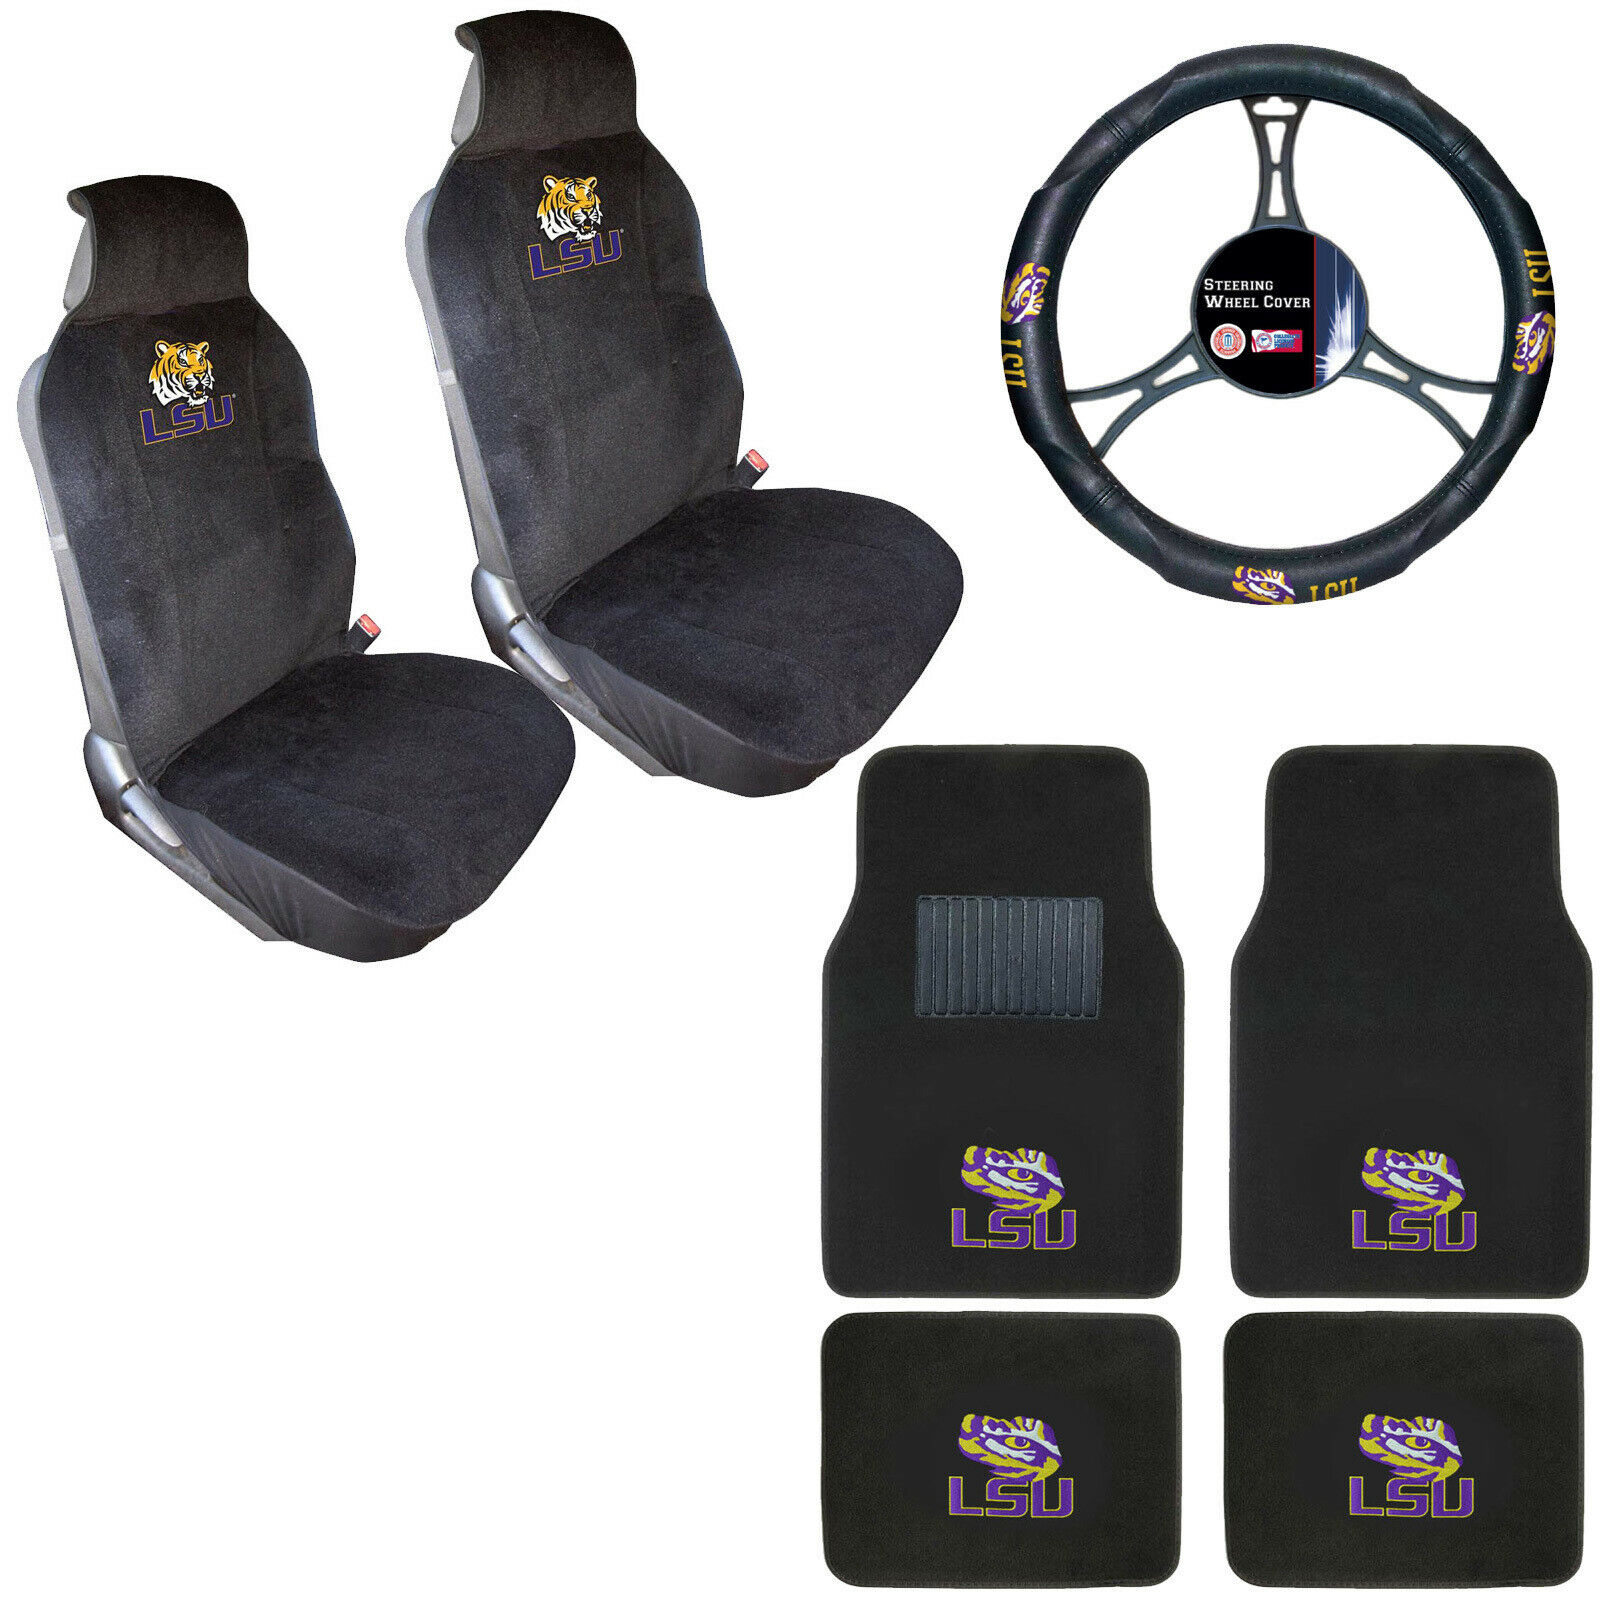 New NCAA LSU Tigers Car Truck Seat Covers Steering Wheel Cover & Floor Mats Set